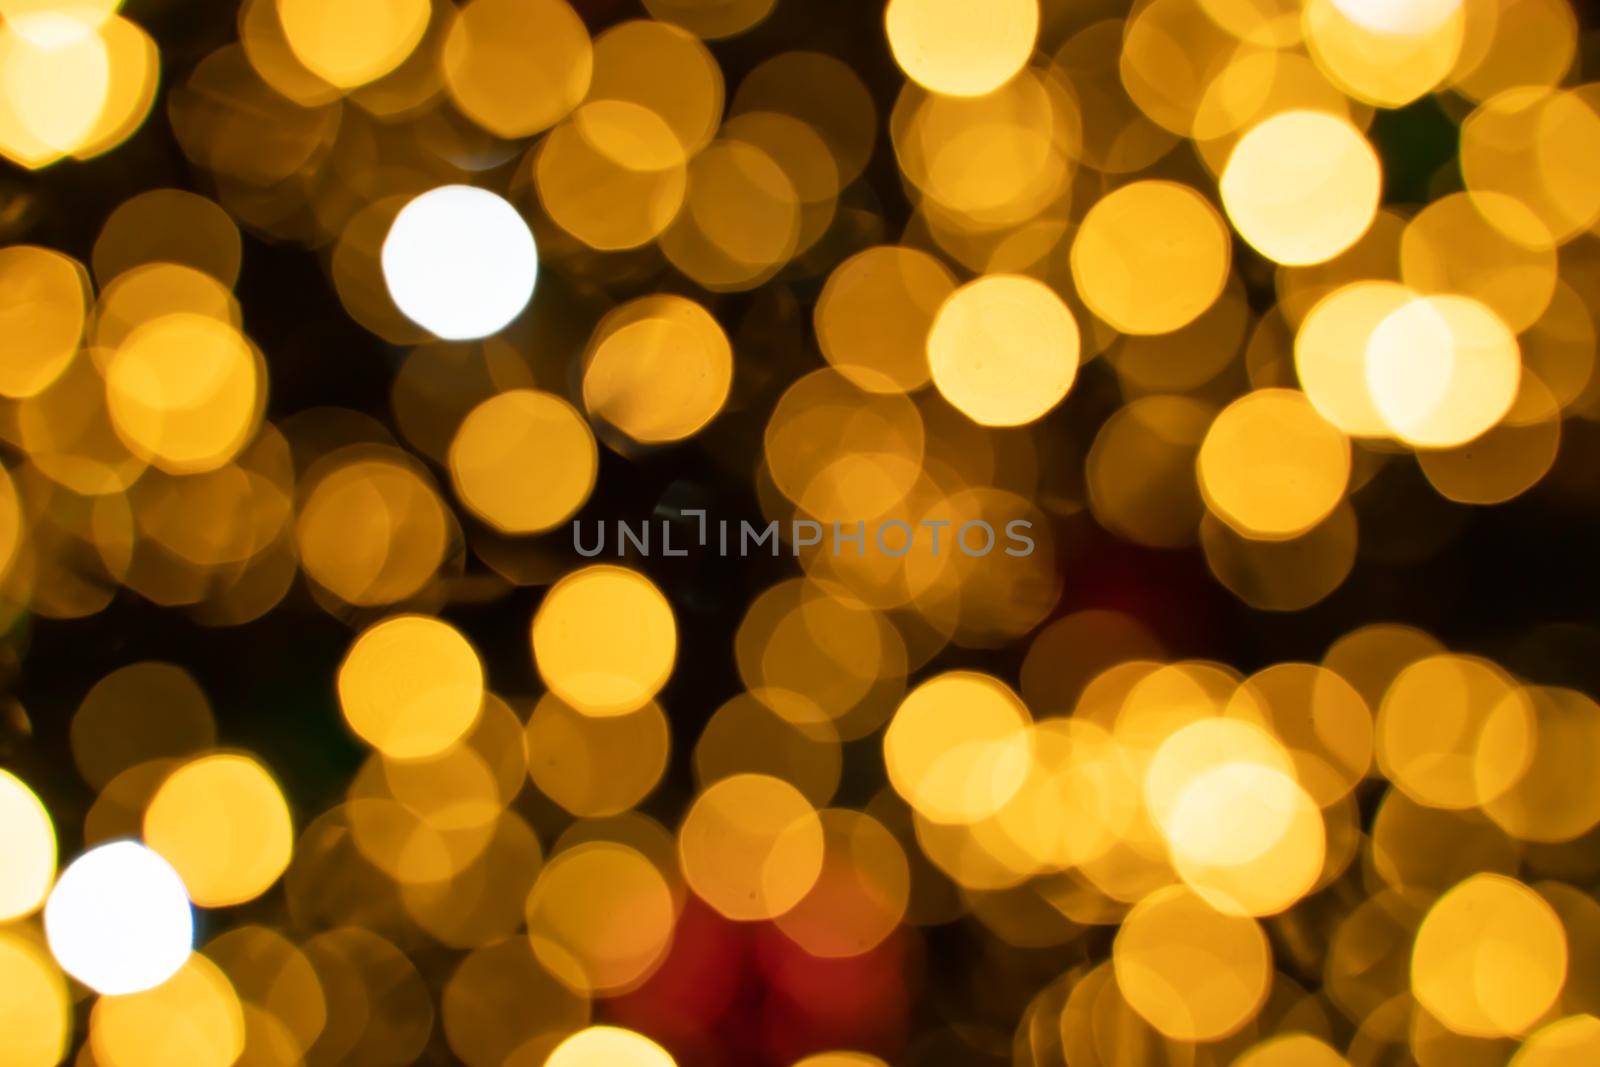 Christmas ilumination bokeh gights in the city by Matiunina